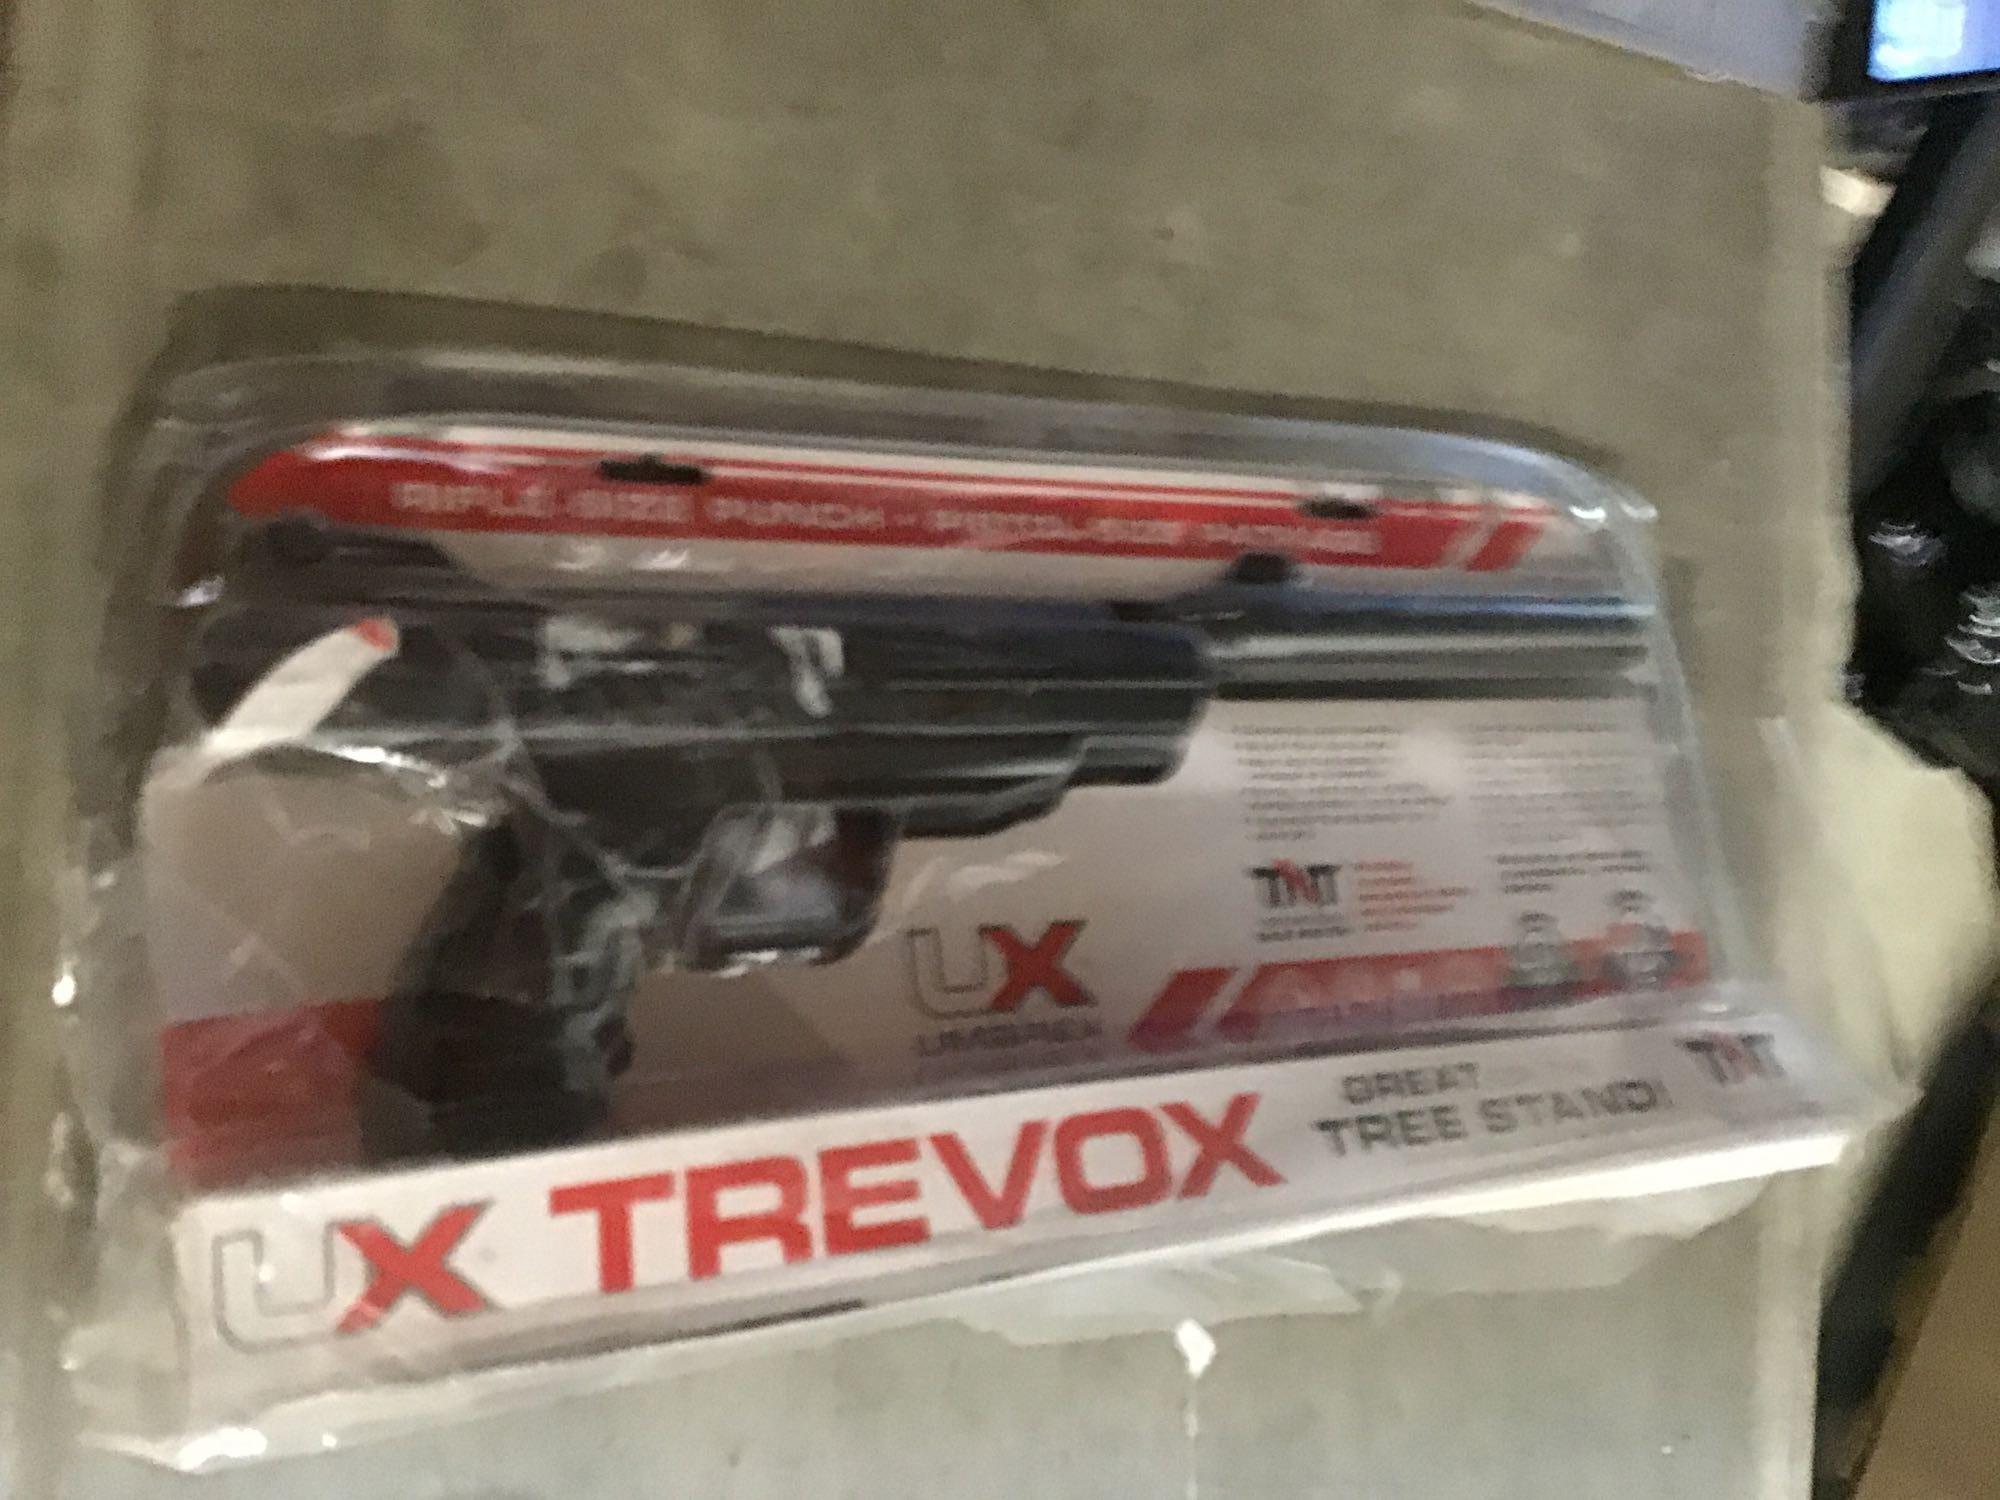  Umarex Trevox Break Barrel .177 Caliber Pellet Gun